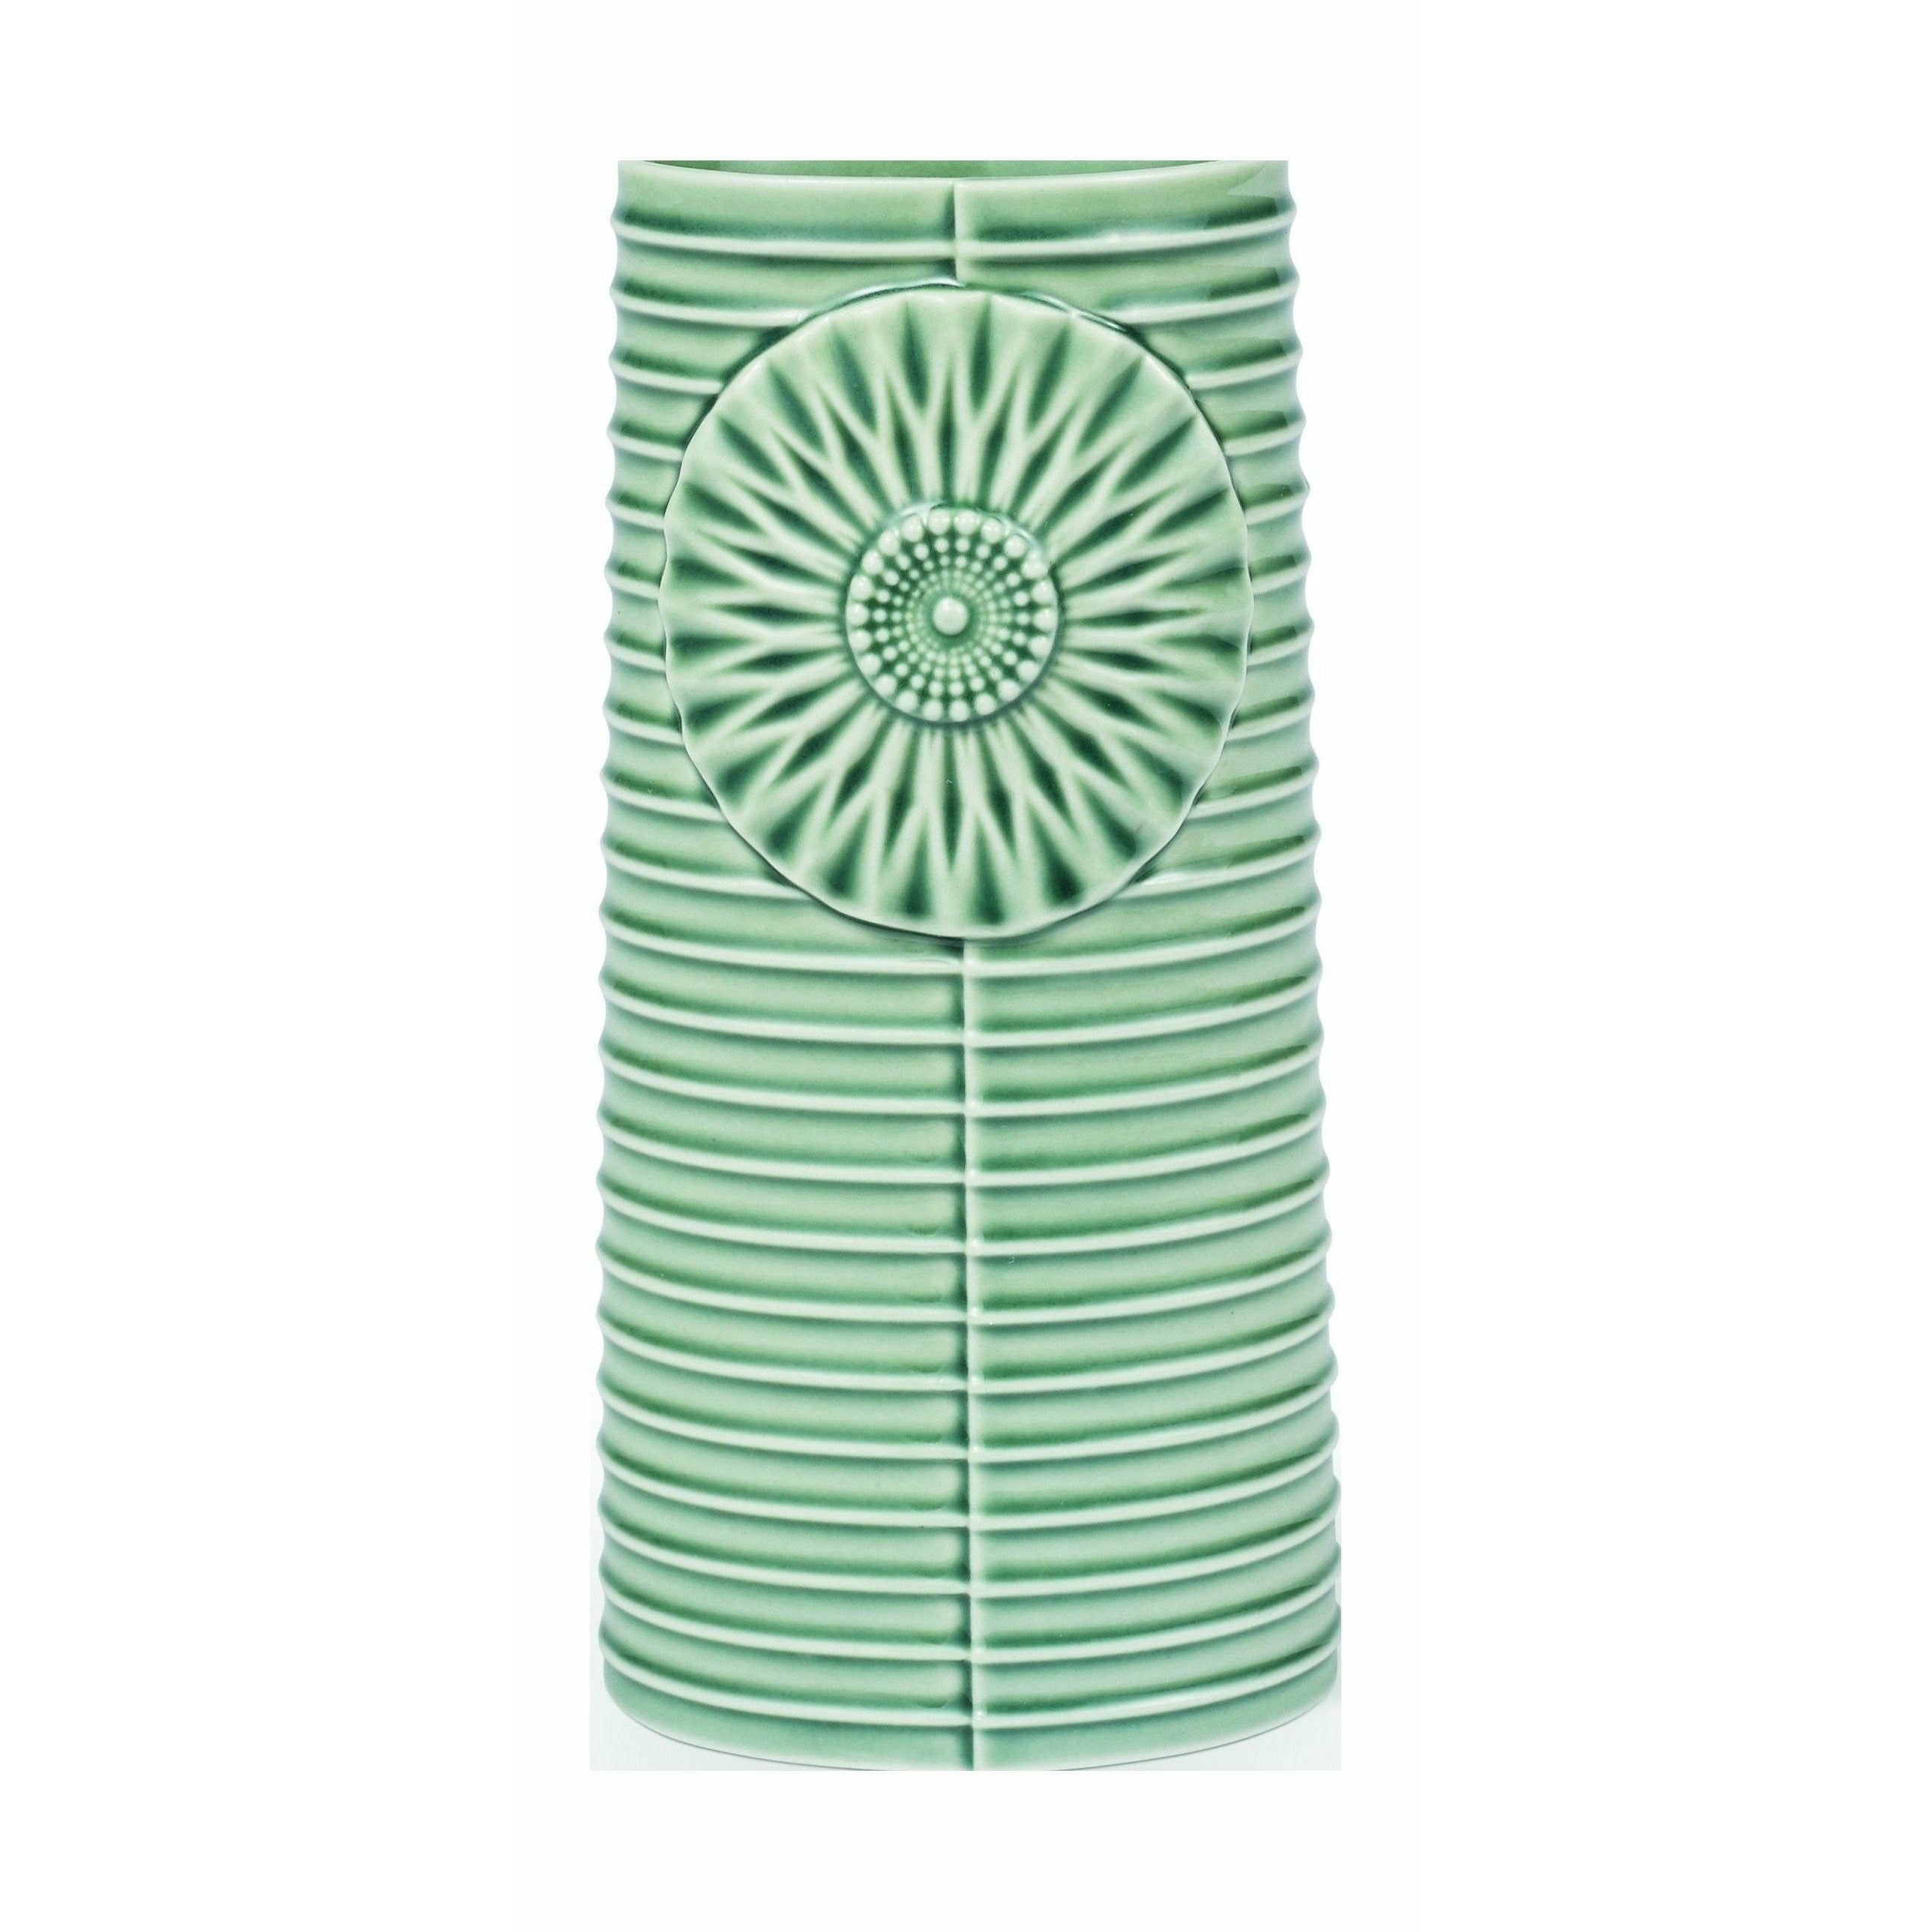 Dottir Pipanella linjer vas oval grön, 18,1 cm